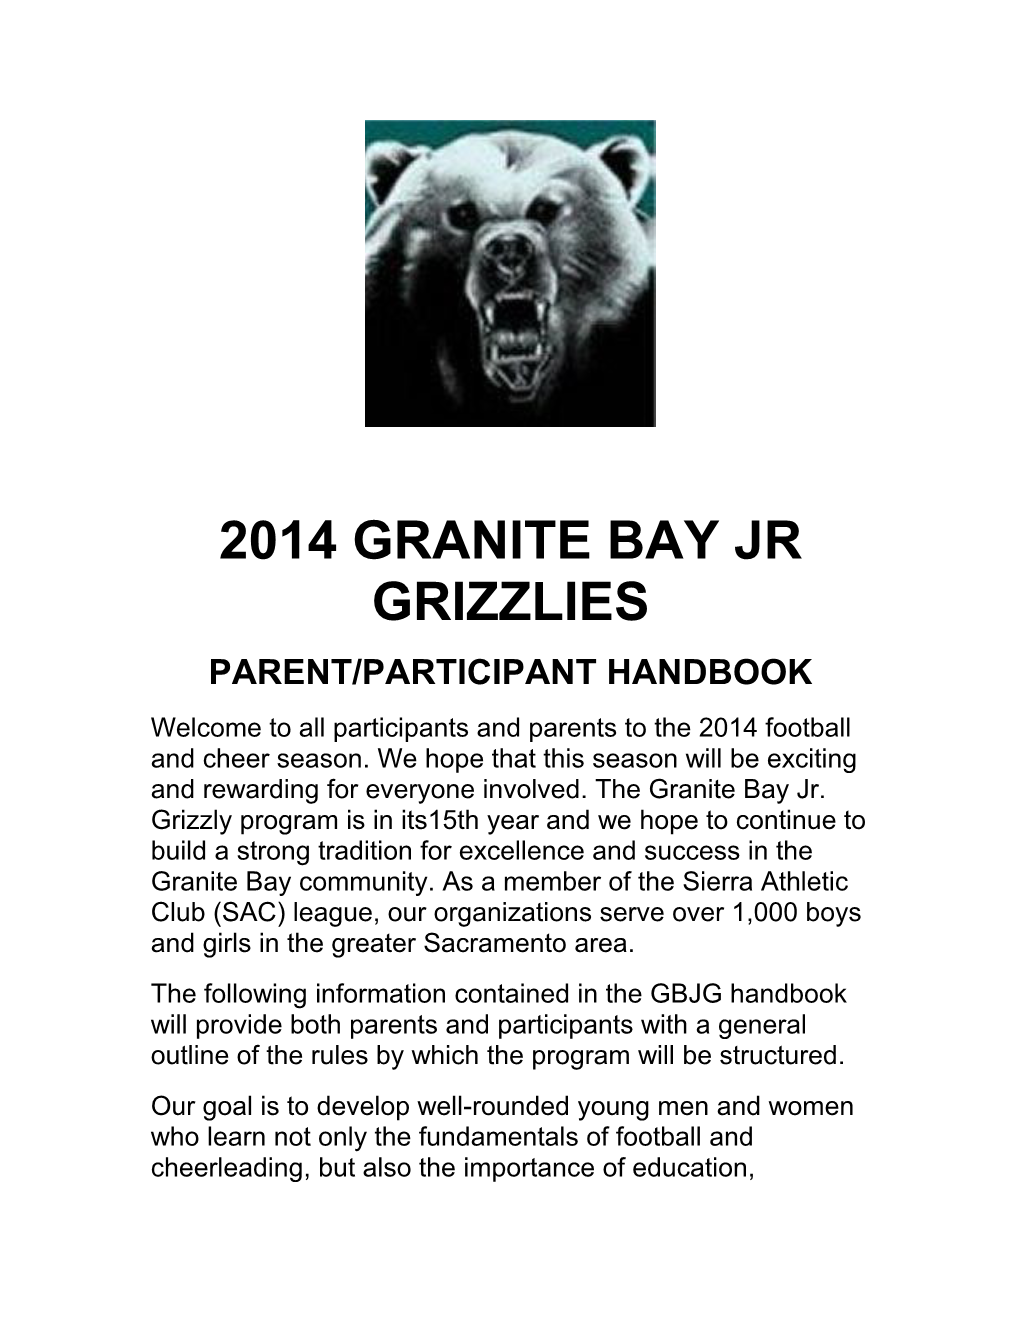 2014 Granite Bay Jr Grizzlies